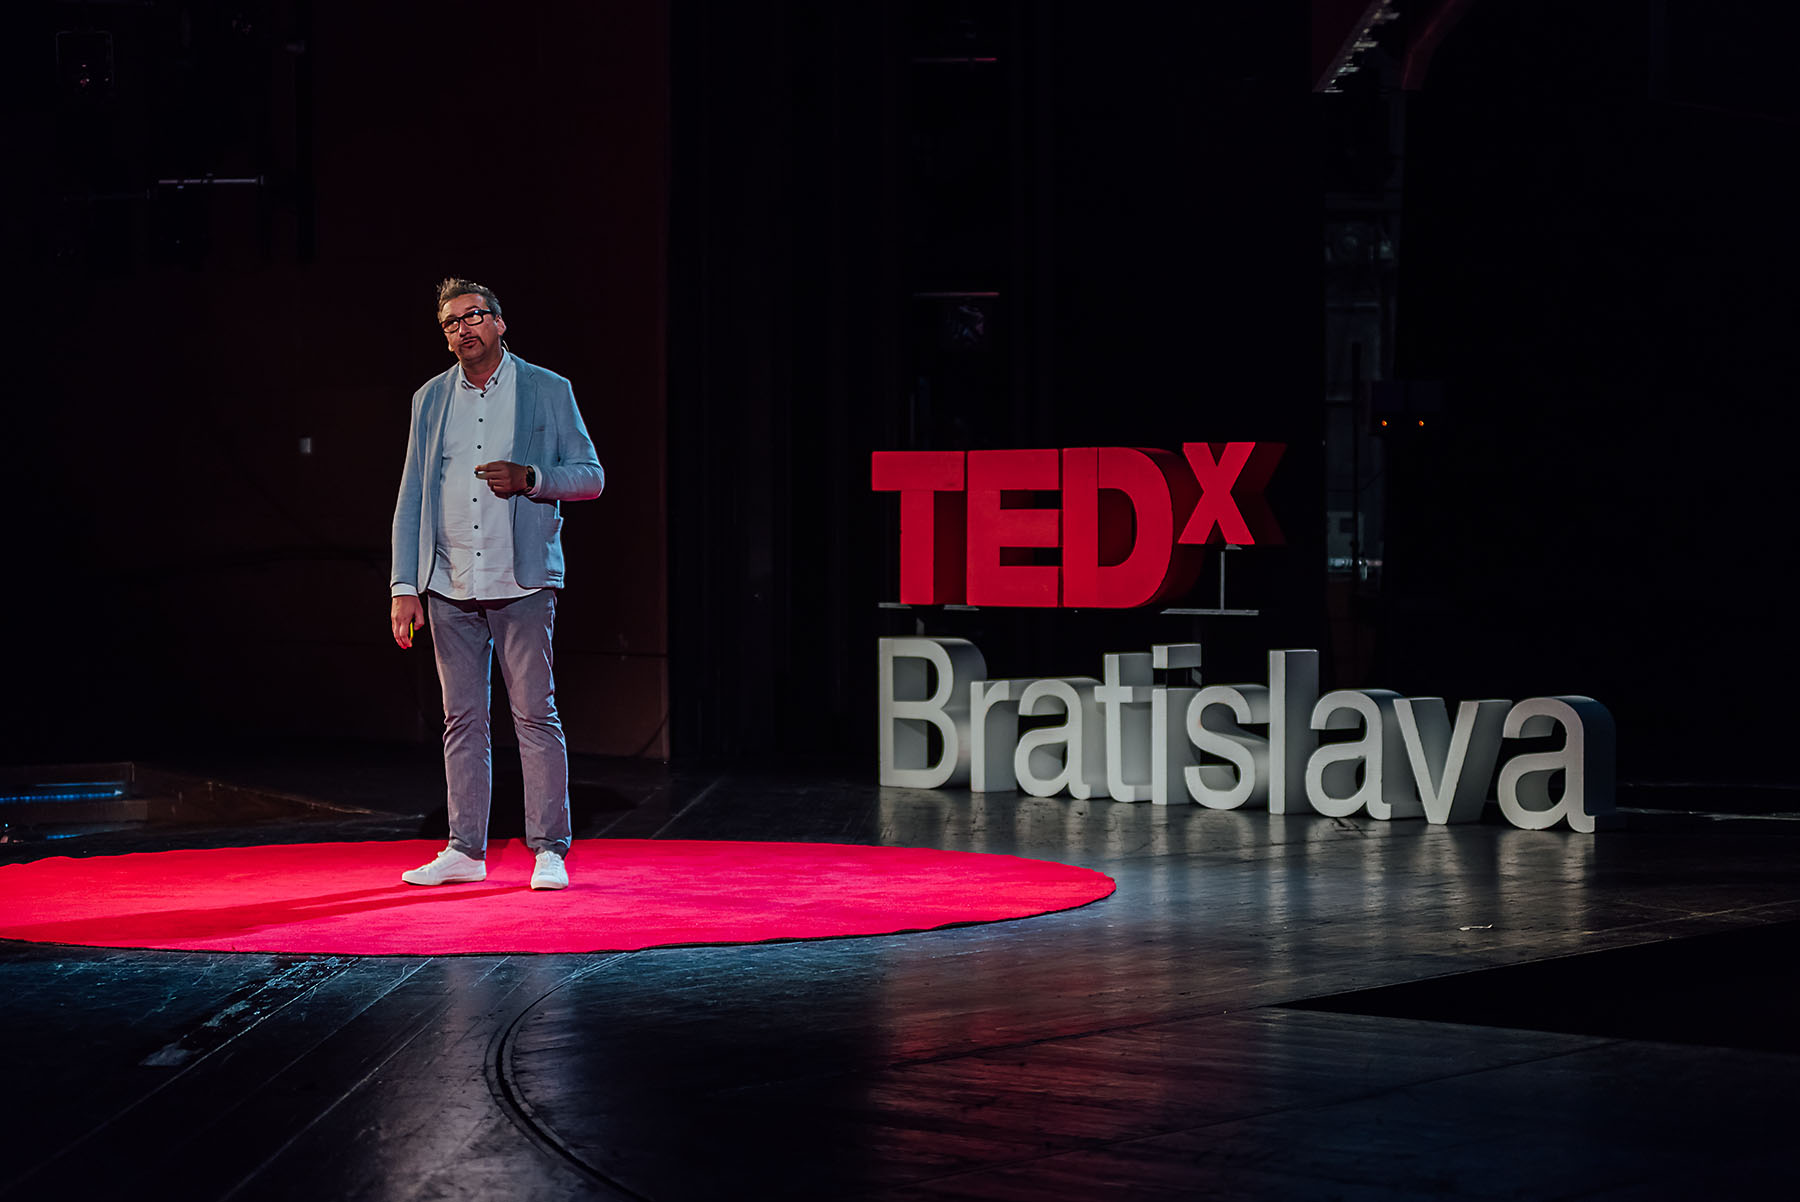 TEDx Bratislava 2019 - tedx, snd, konferencia, bratislava - eventovy fotograf